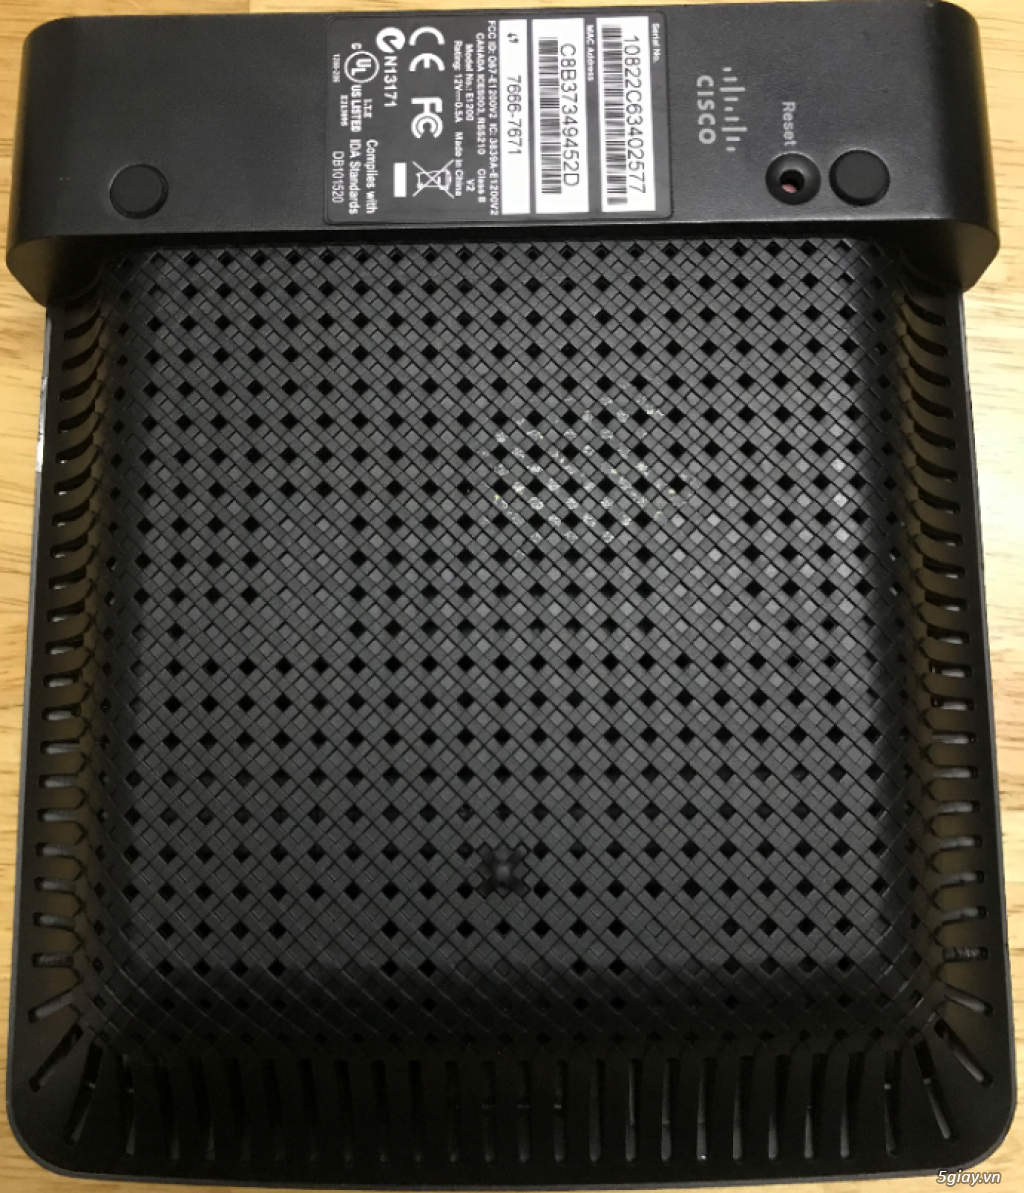 Bộ Phát Wifi Router Linksys E1200 chuẩn N 300Mbps, End: 23h 01/10/19 - 1